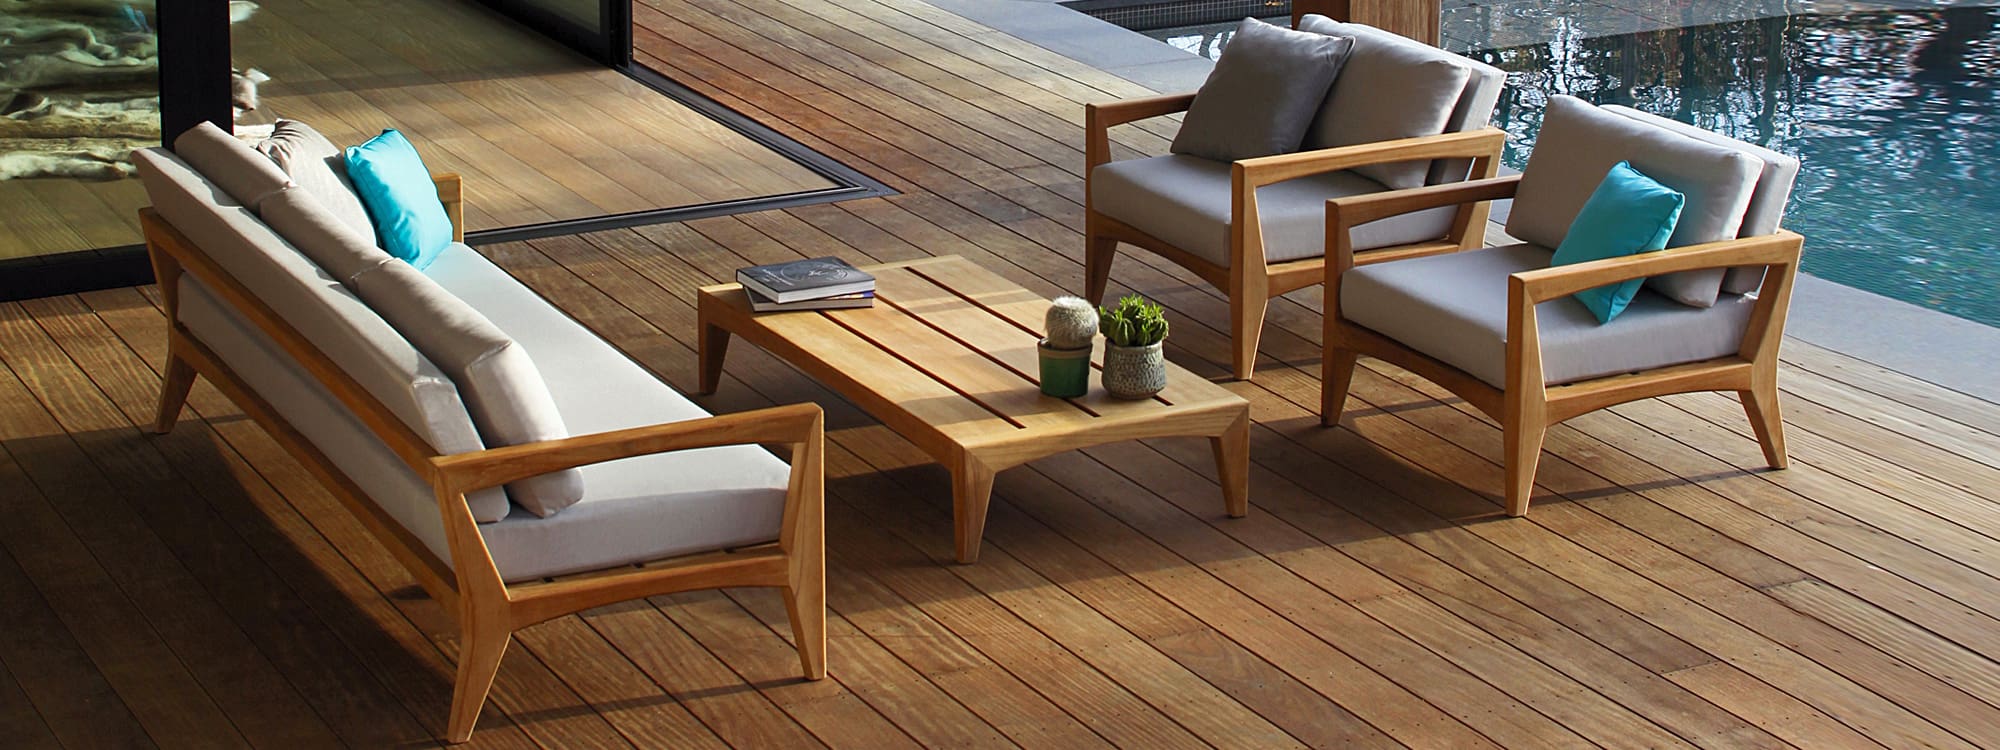 Image of Zenhit Teak Garden Sofa set with light grey cushions on poolside decking